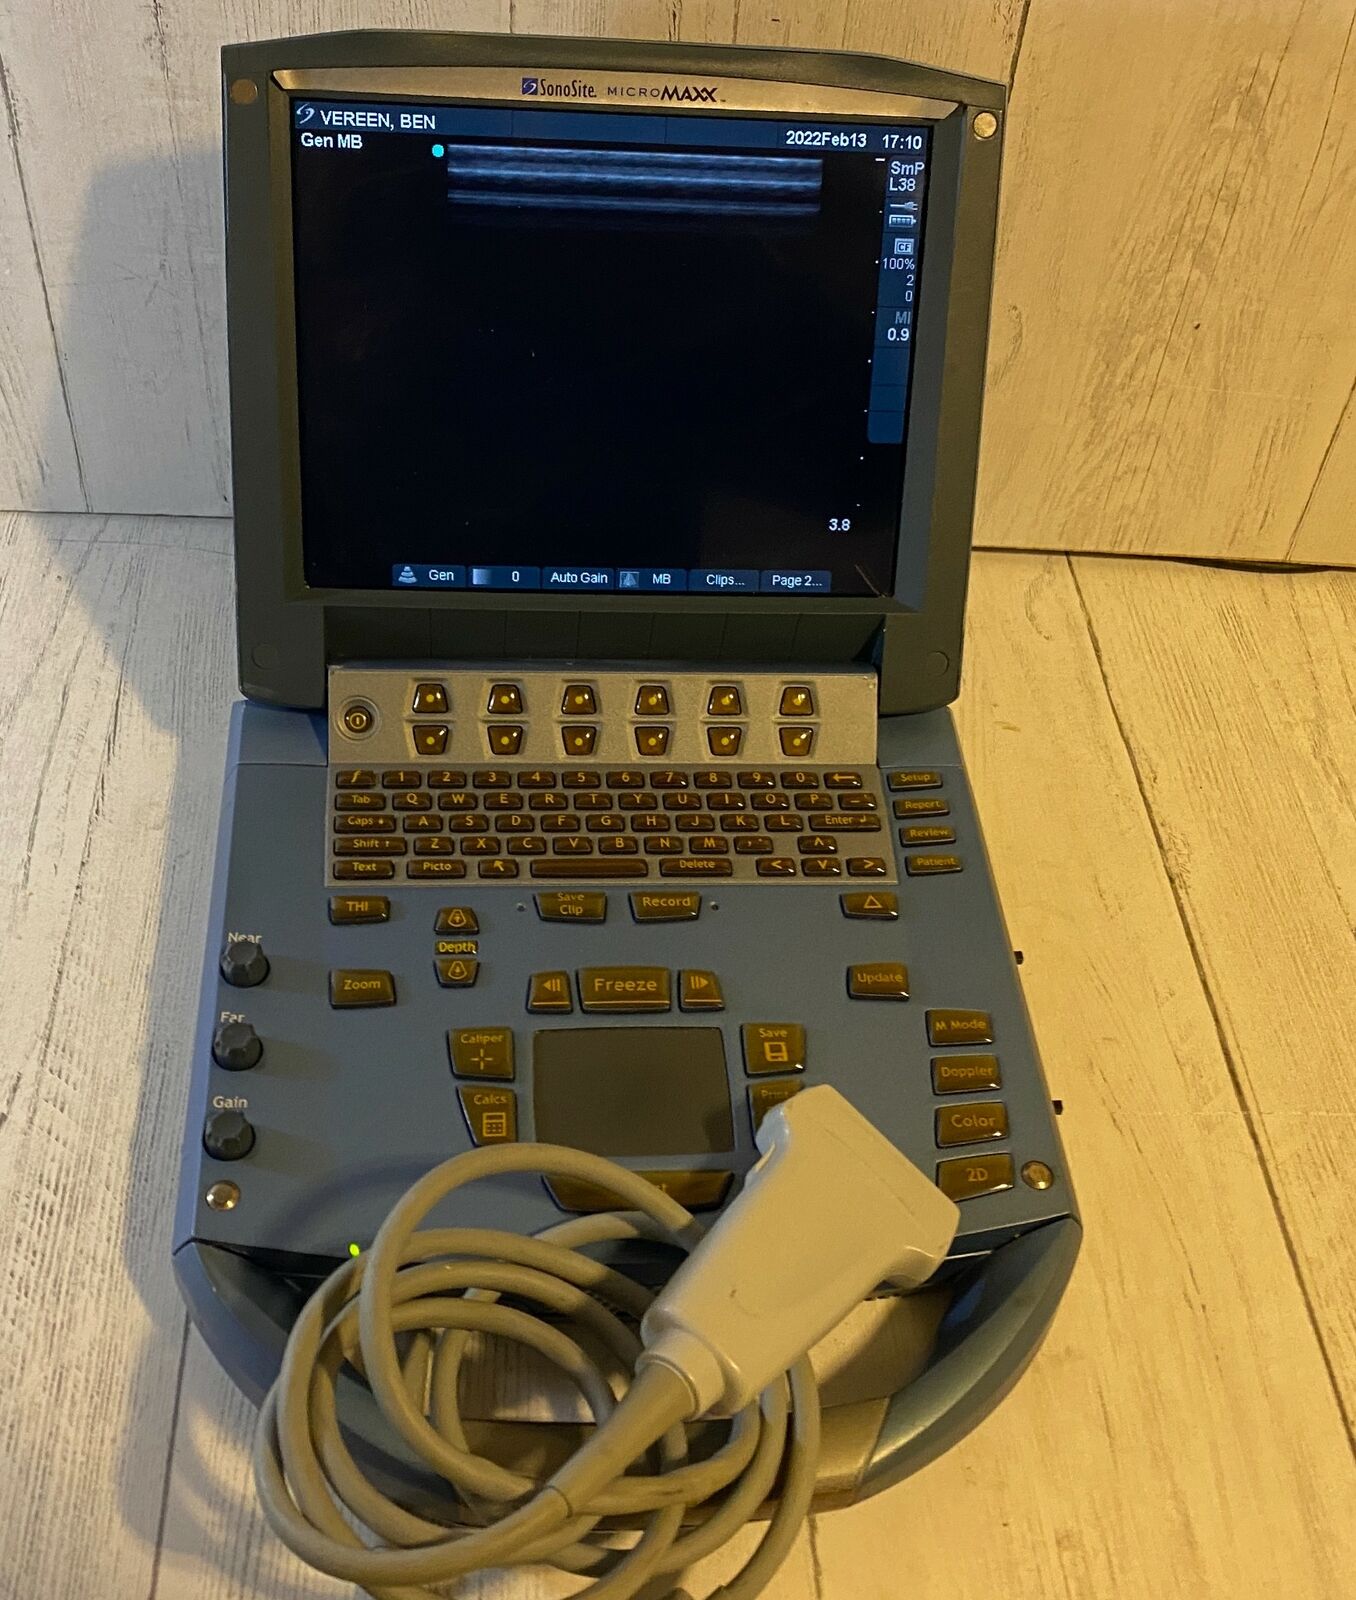 Sonosite MicroMaxx Portable Ultrasound 2008 - Main unit DIAGNOSTIC ULTRASOUND MACHINES FOR SALE